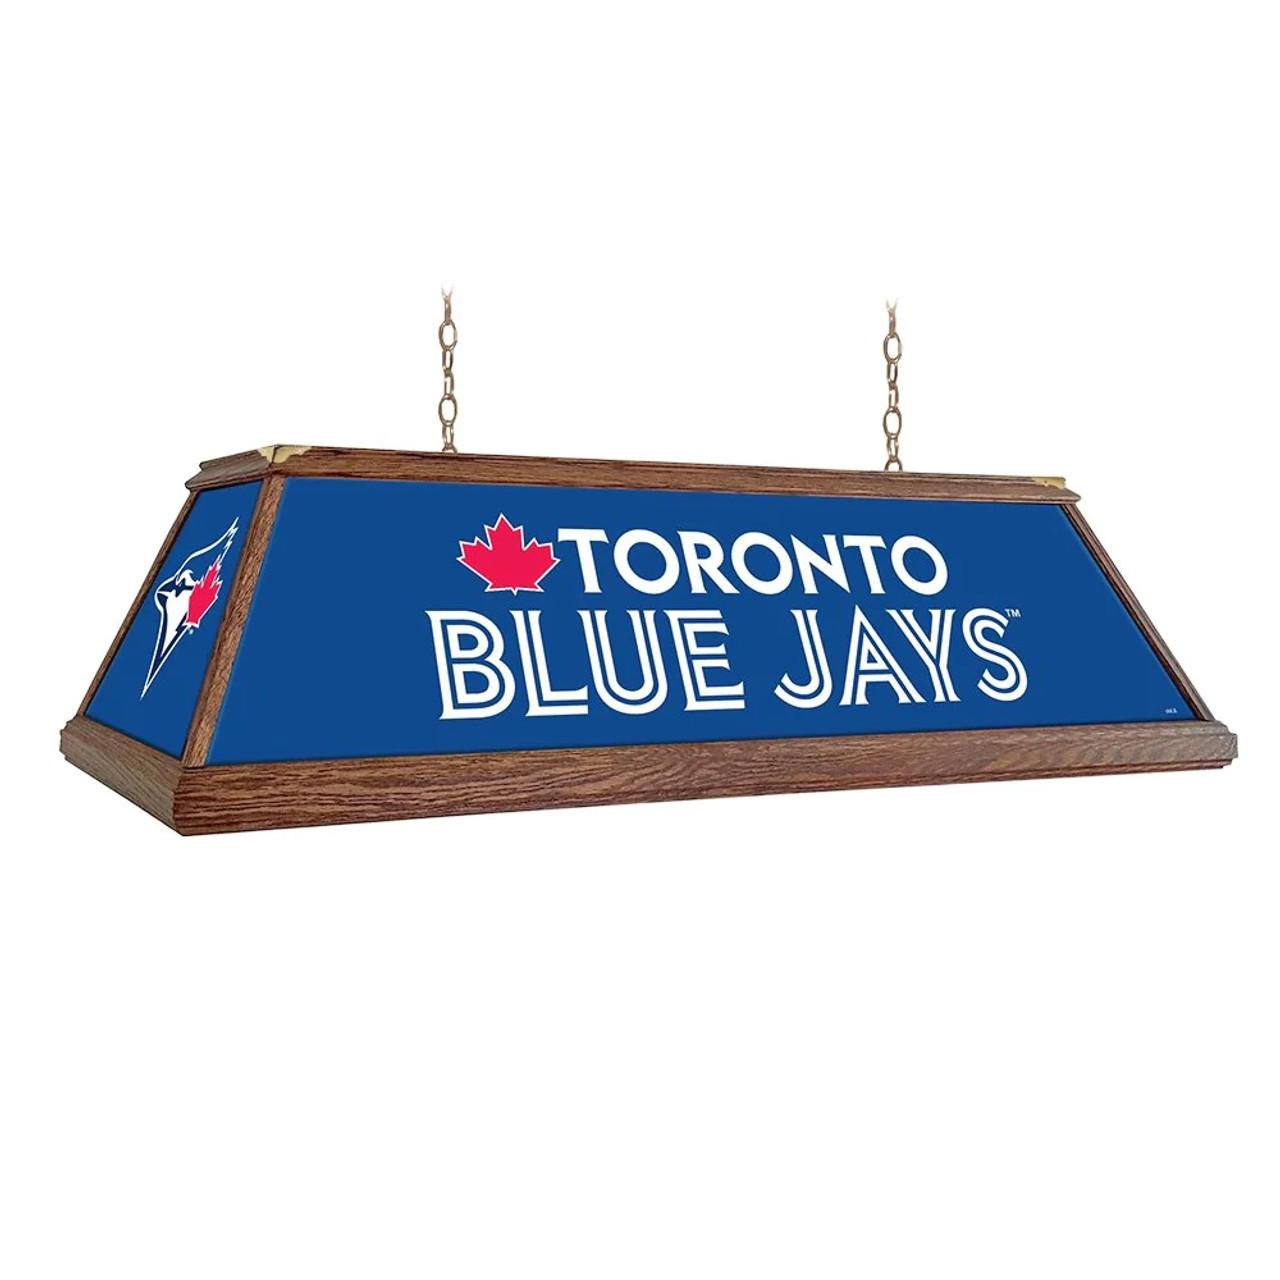 MBBLUE JAYS-330-01A, TOR, Toronto Blue, Jays, Premium, Wood, Billiard, Pool, Table, Light, Lamp, MLB, The Fan-Brand, "Blue" Version, 704384966623